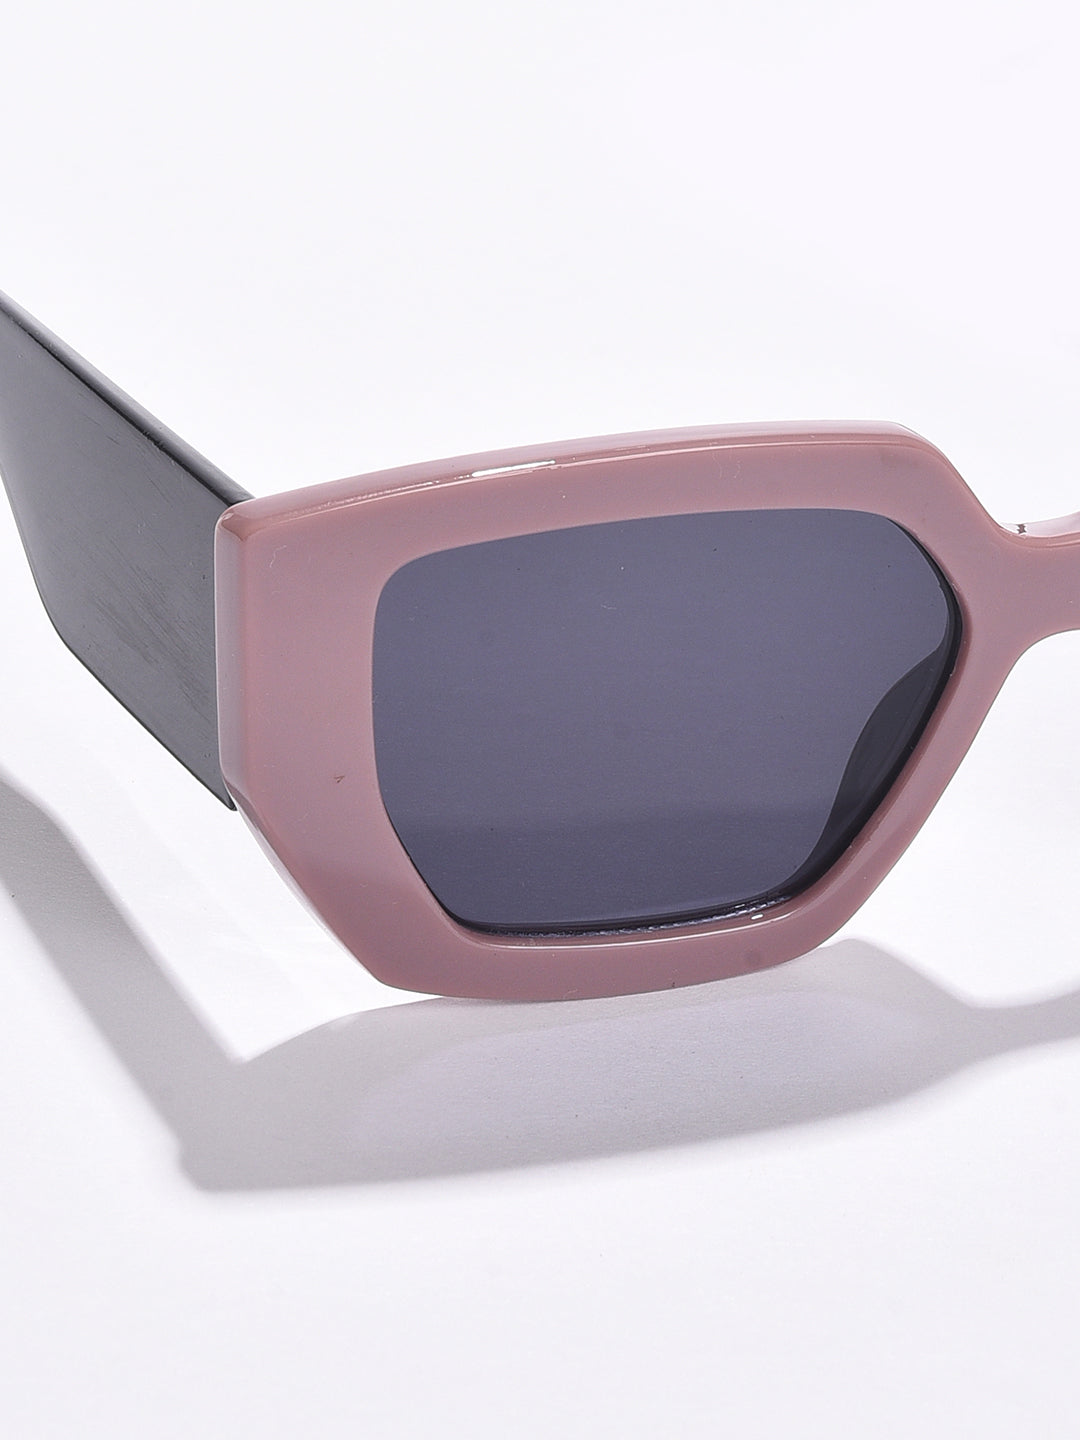 Black Lens Brown Wayfarer Sunglasses